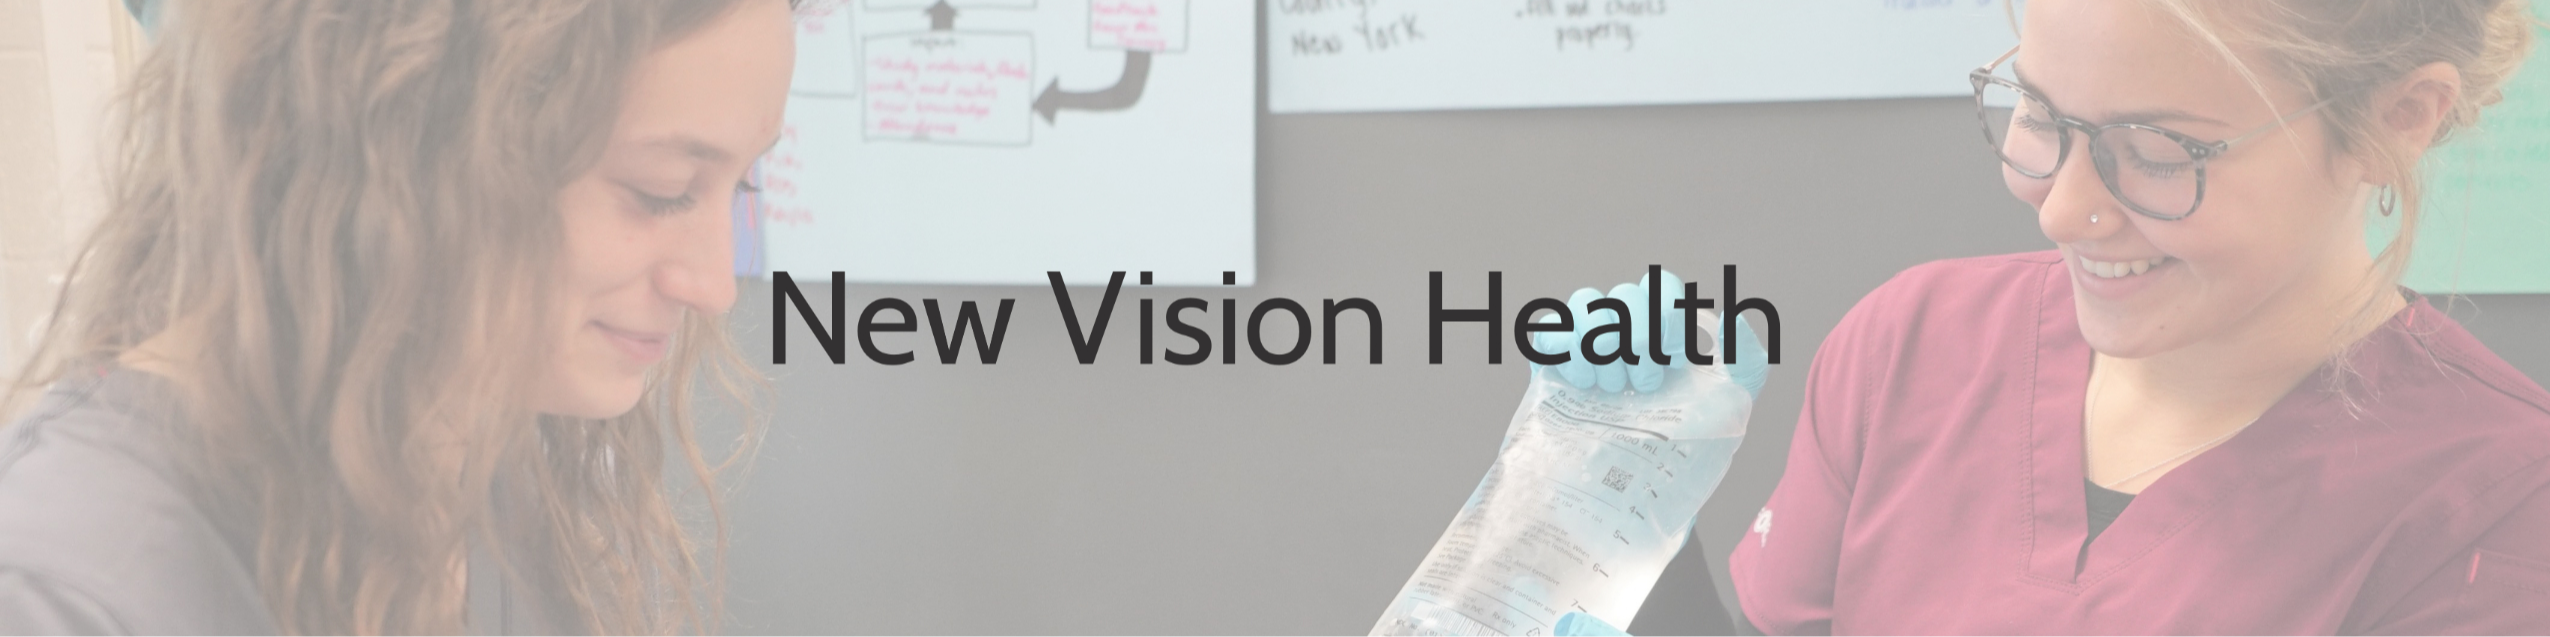 Mew Vision Health header